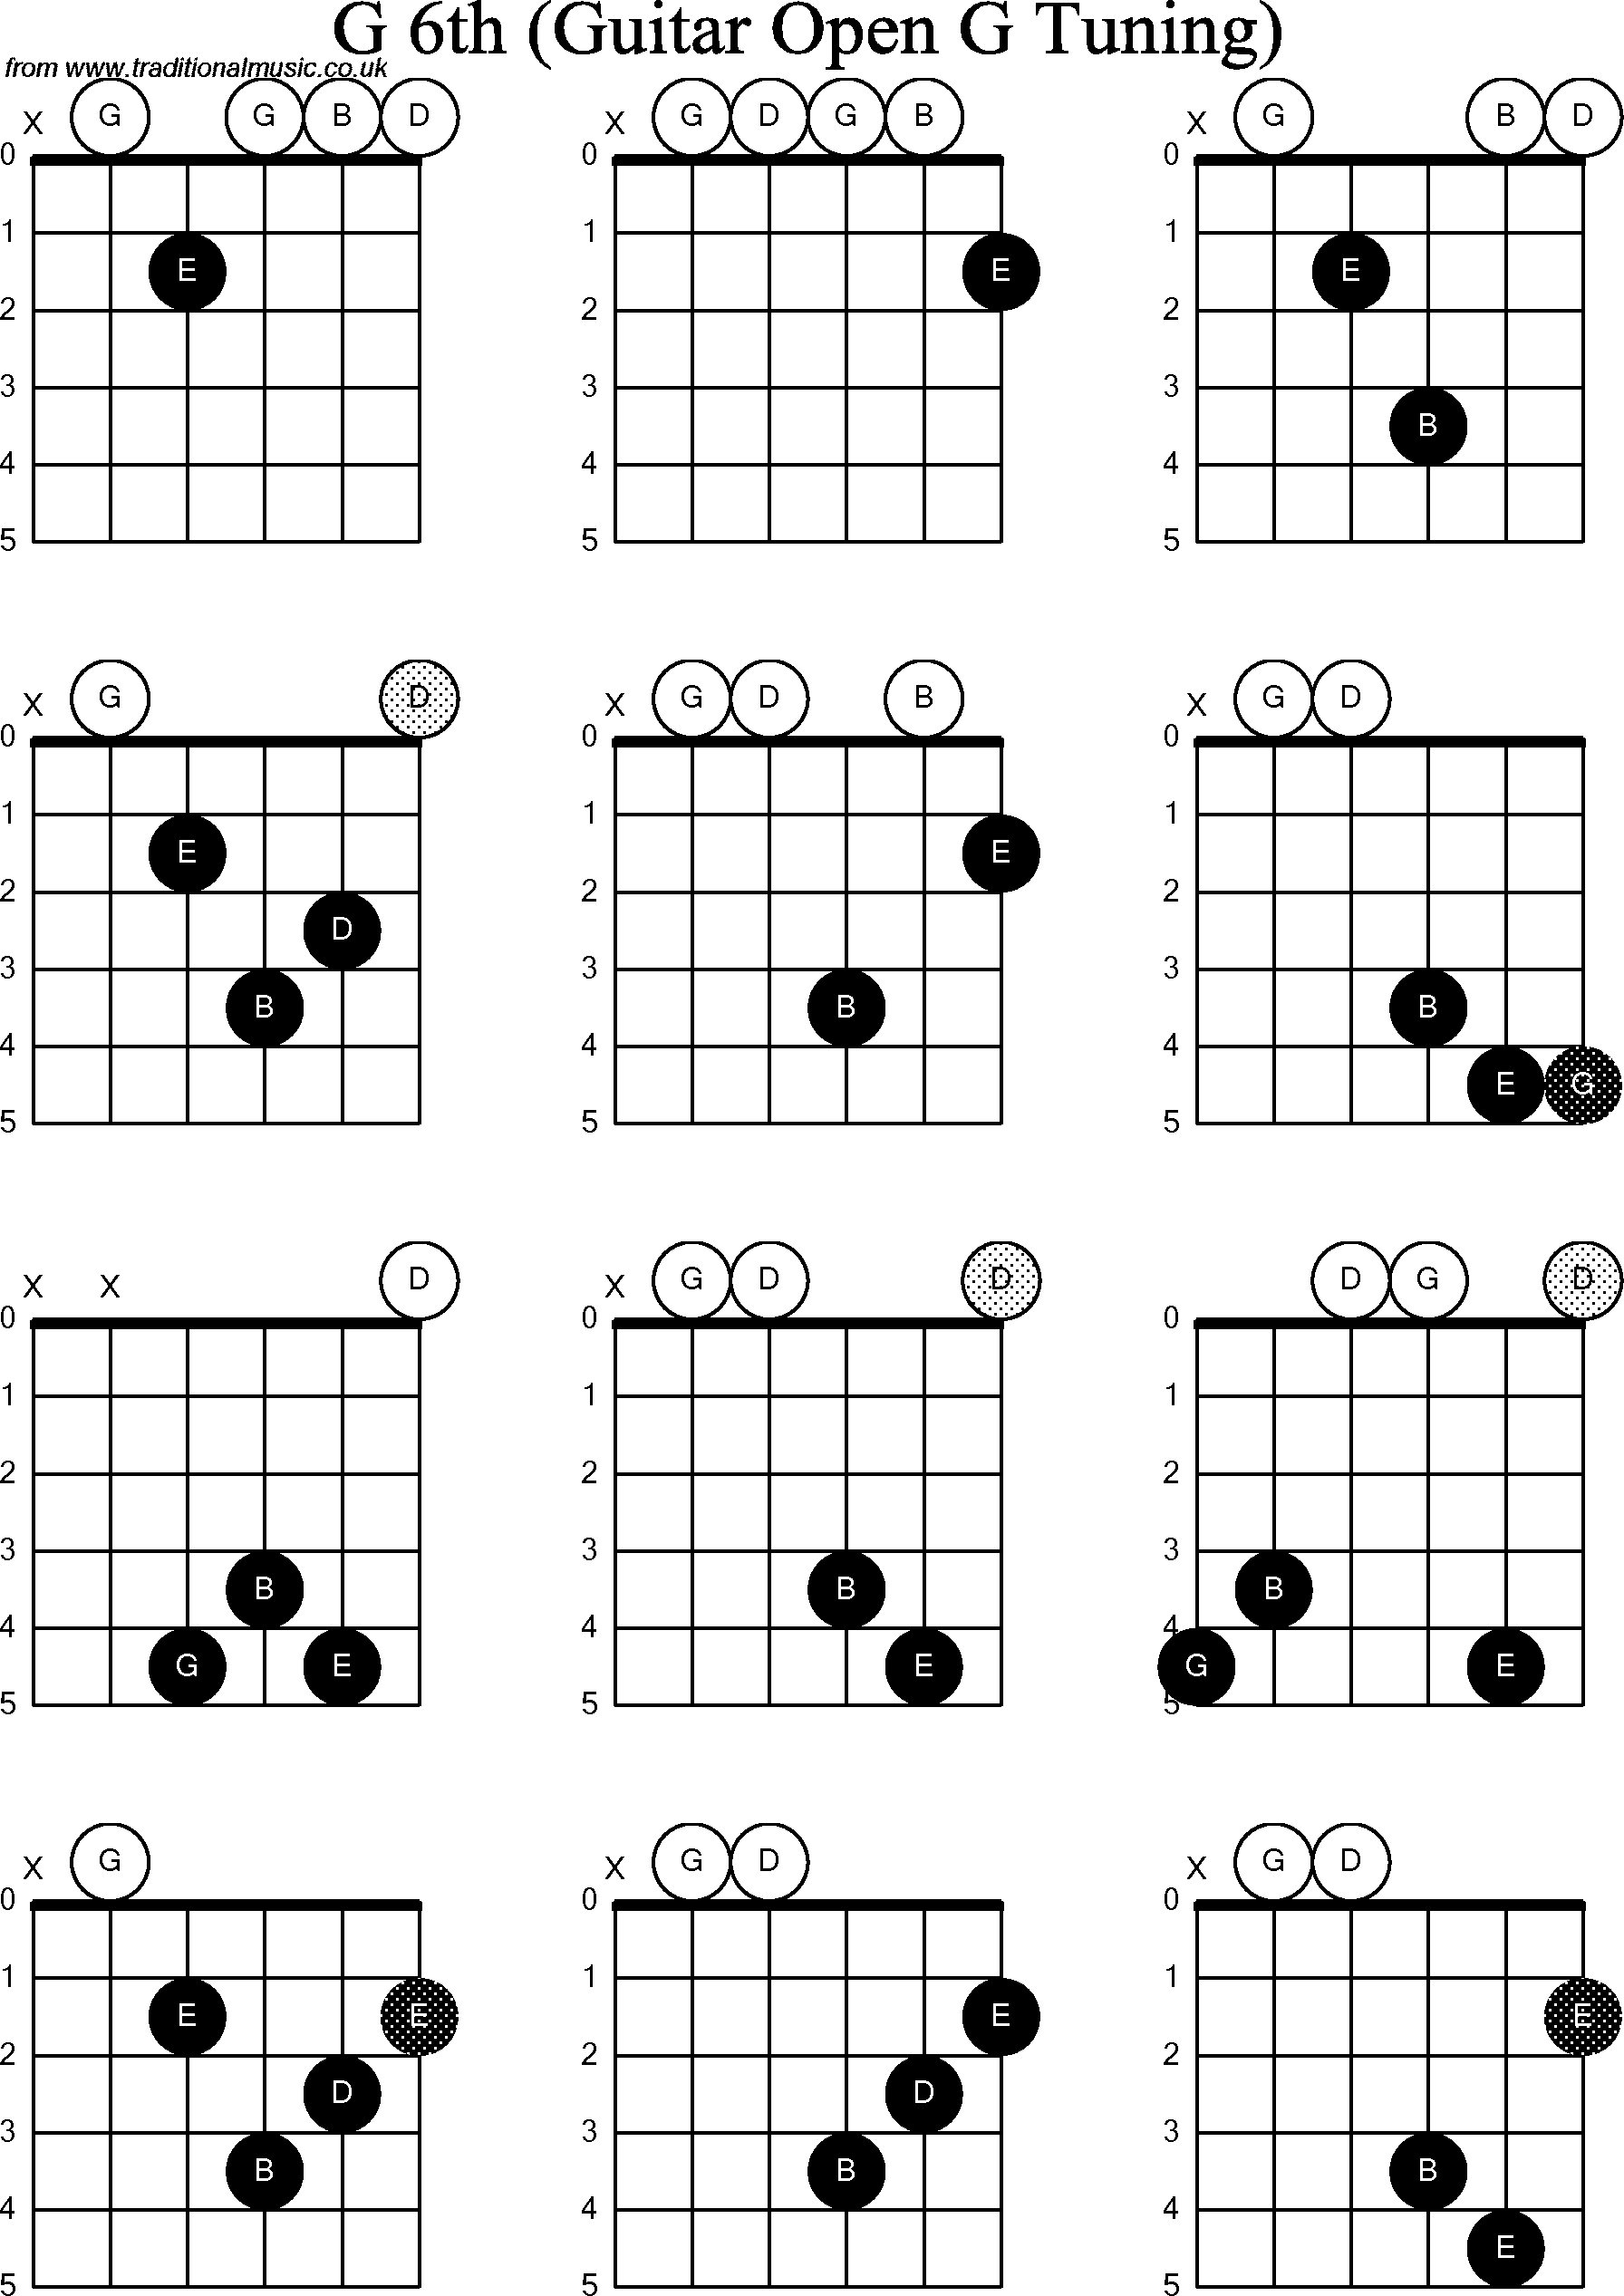 Chord diagrams for Dobro G6th